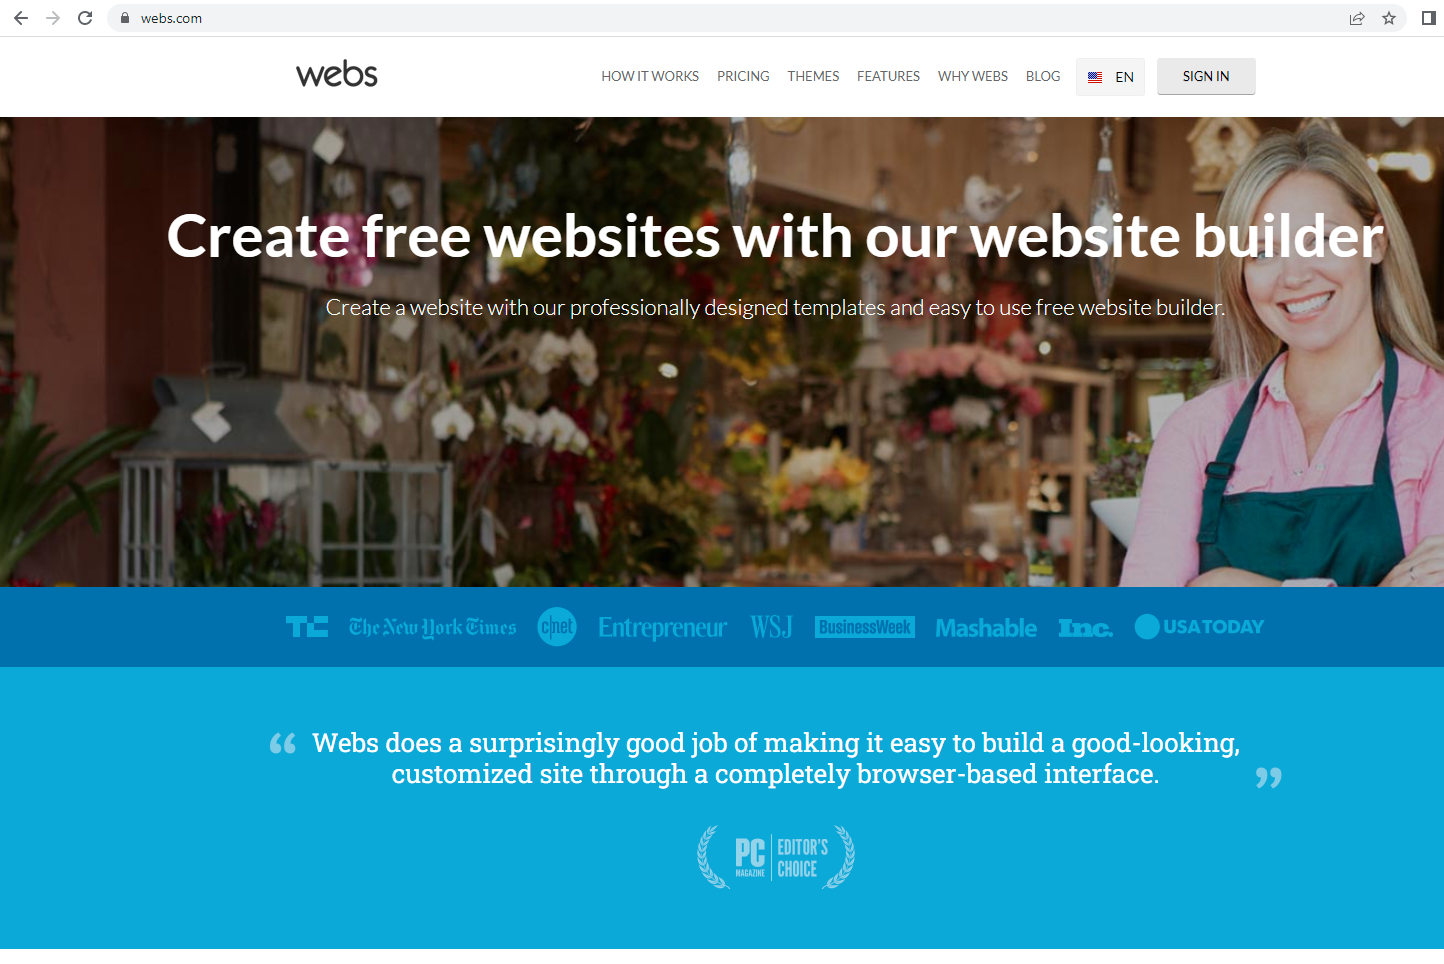 webs.com home page screenshot